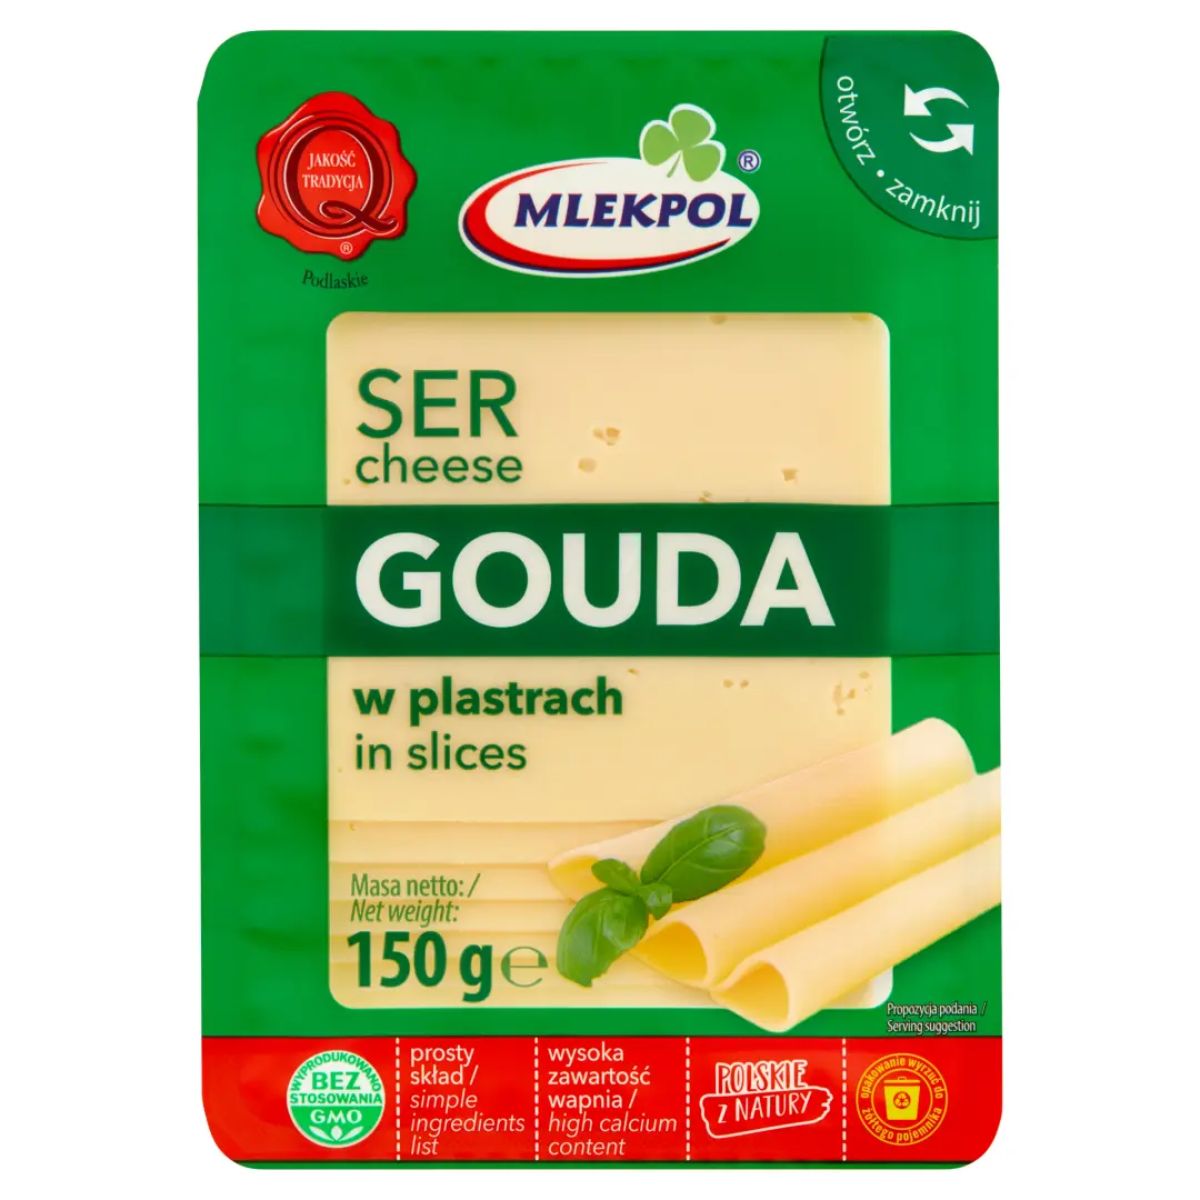 A package of Mlekpol - Ser Cheese Gouda - 150g.